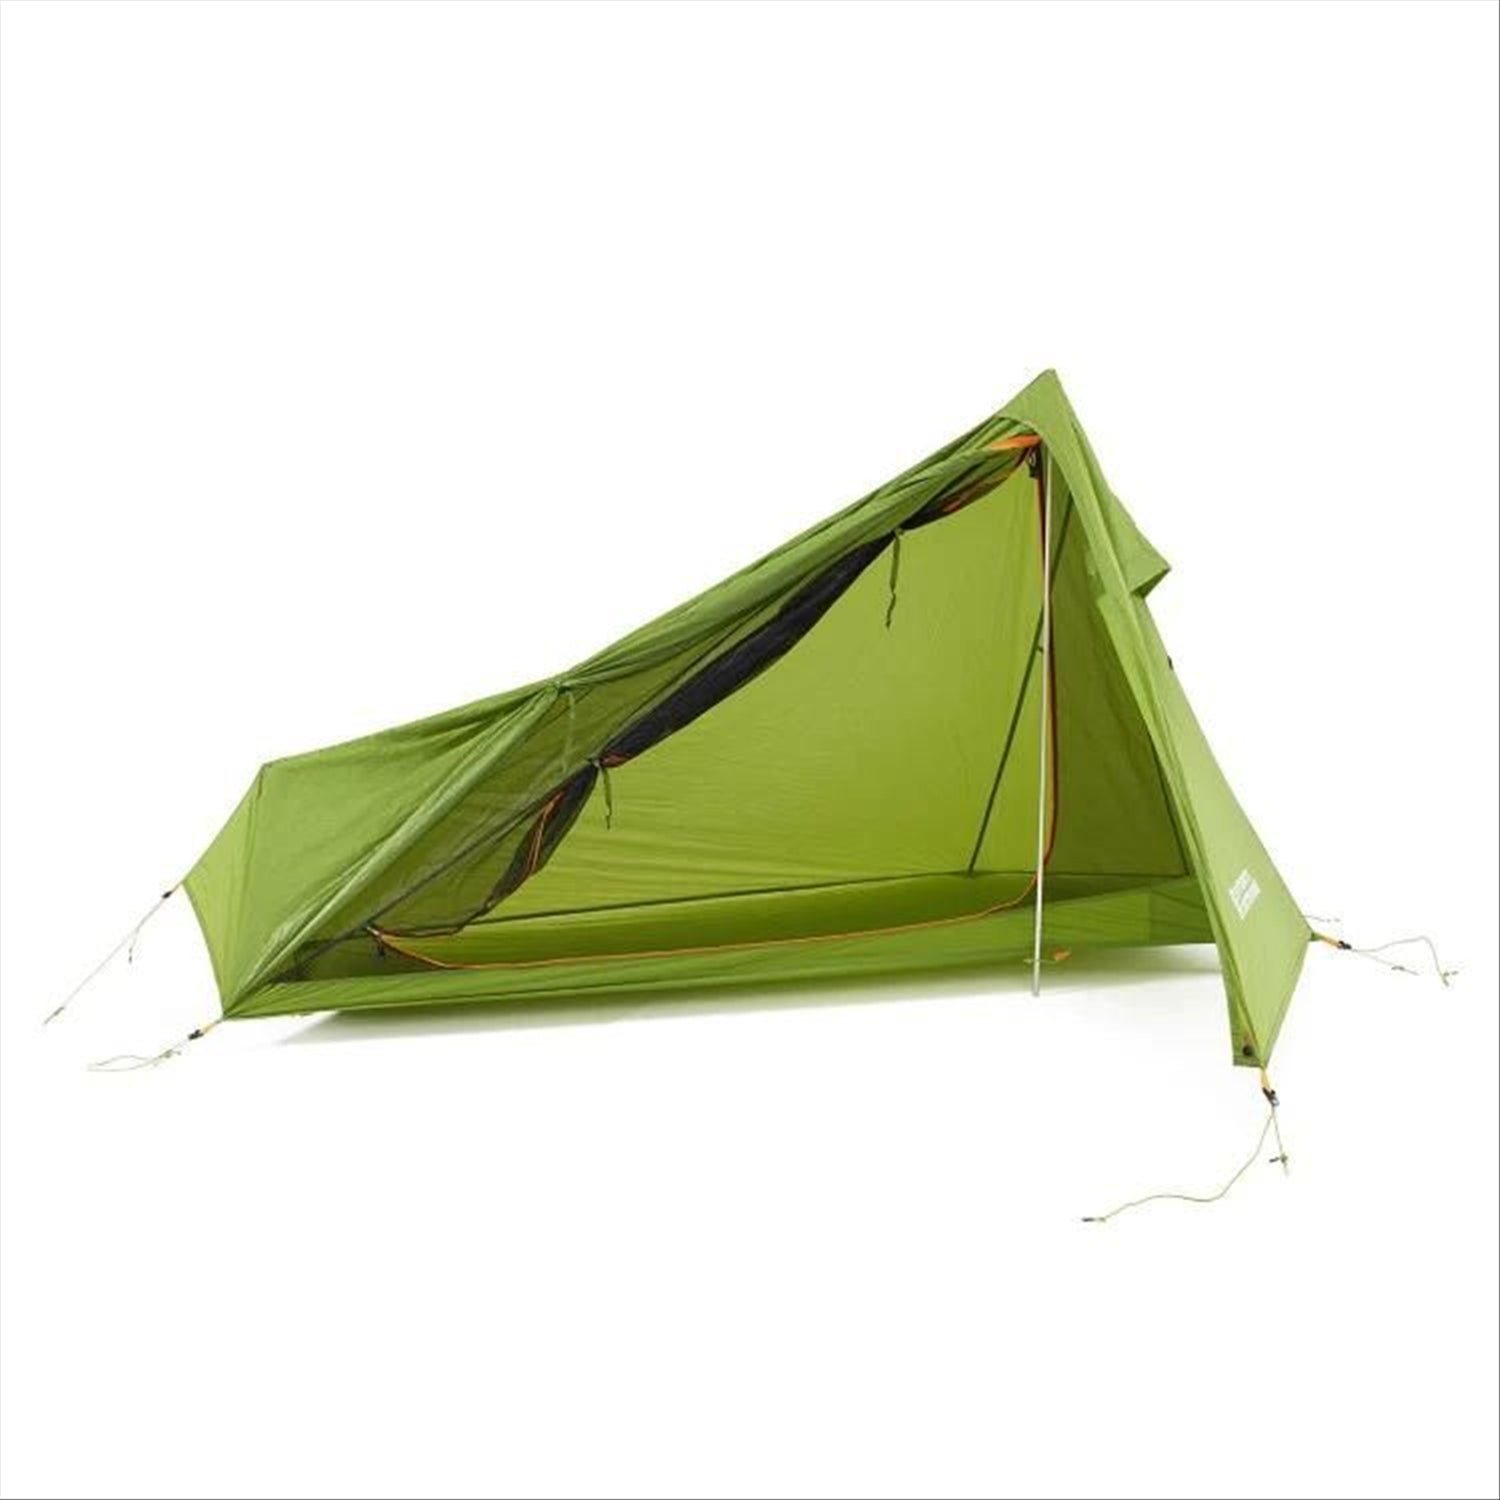 Ultrapack SW - Ultralight Nylon 1 Person Hiking Tent, Single Wall, 710g